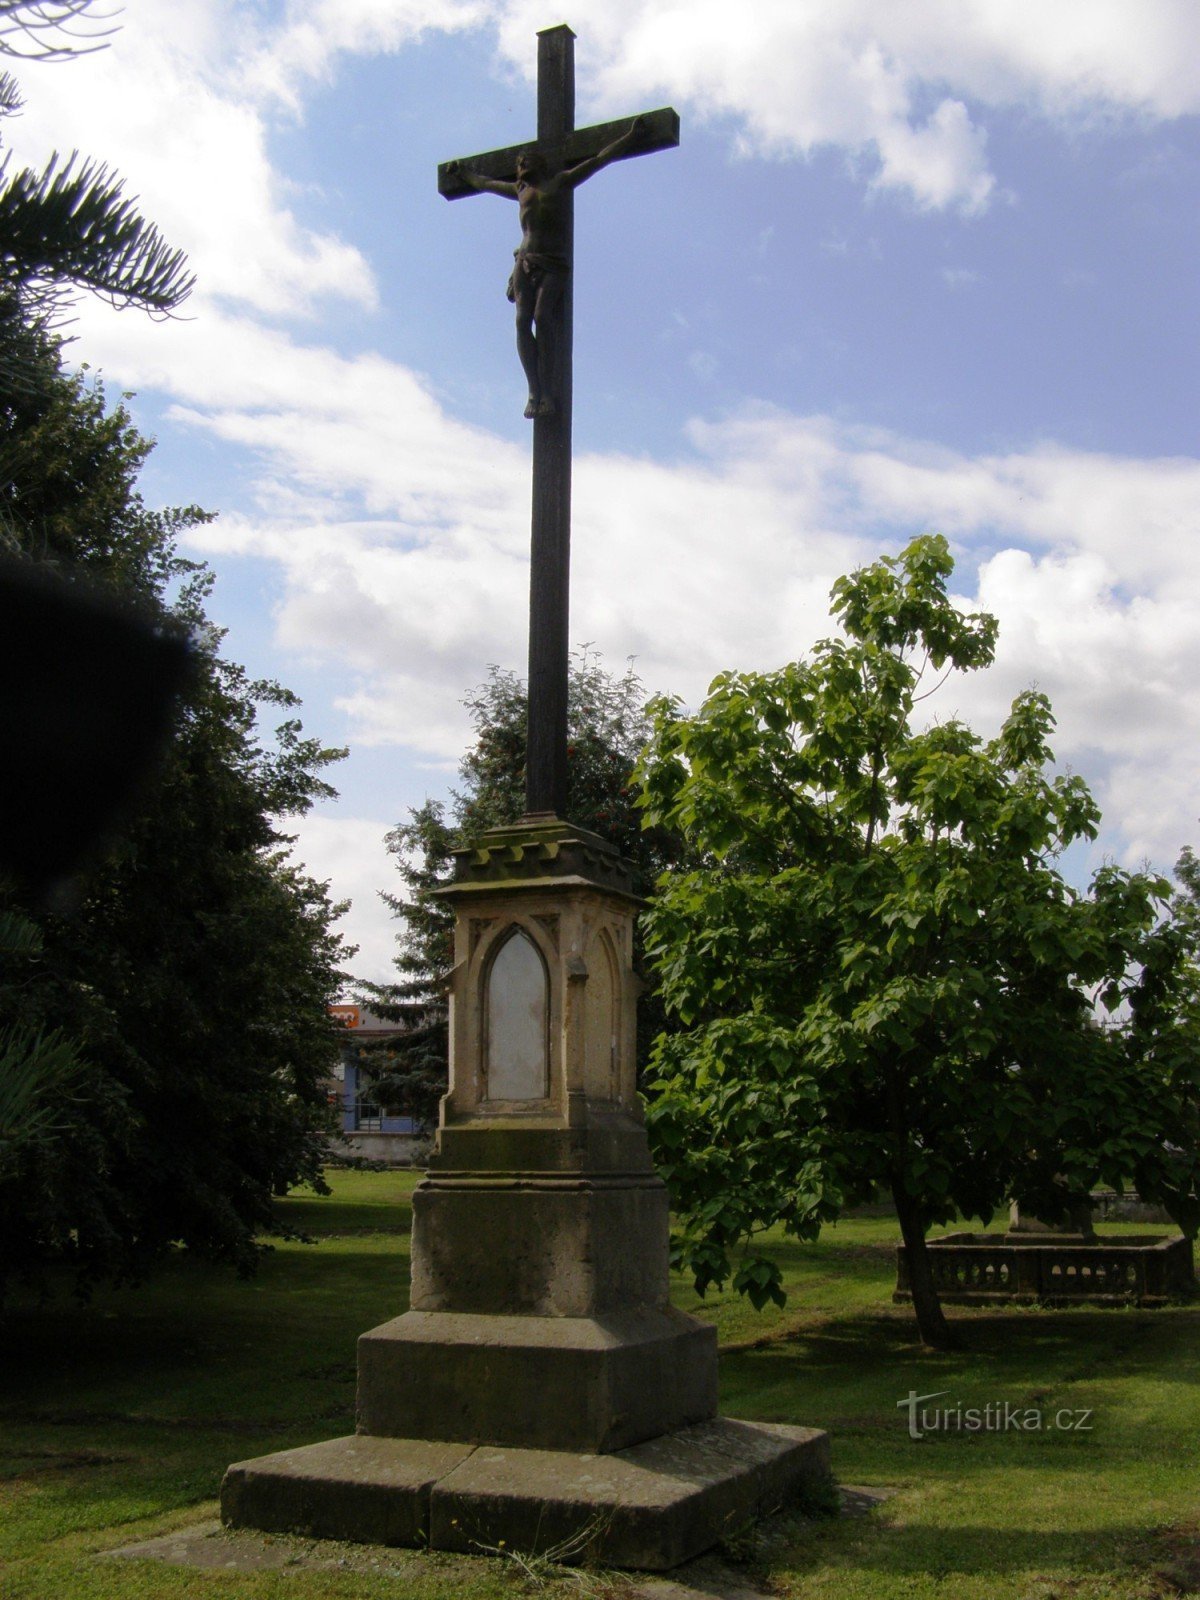 Vitiněves - spomenik križanju